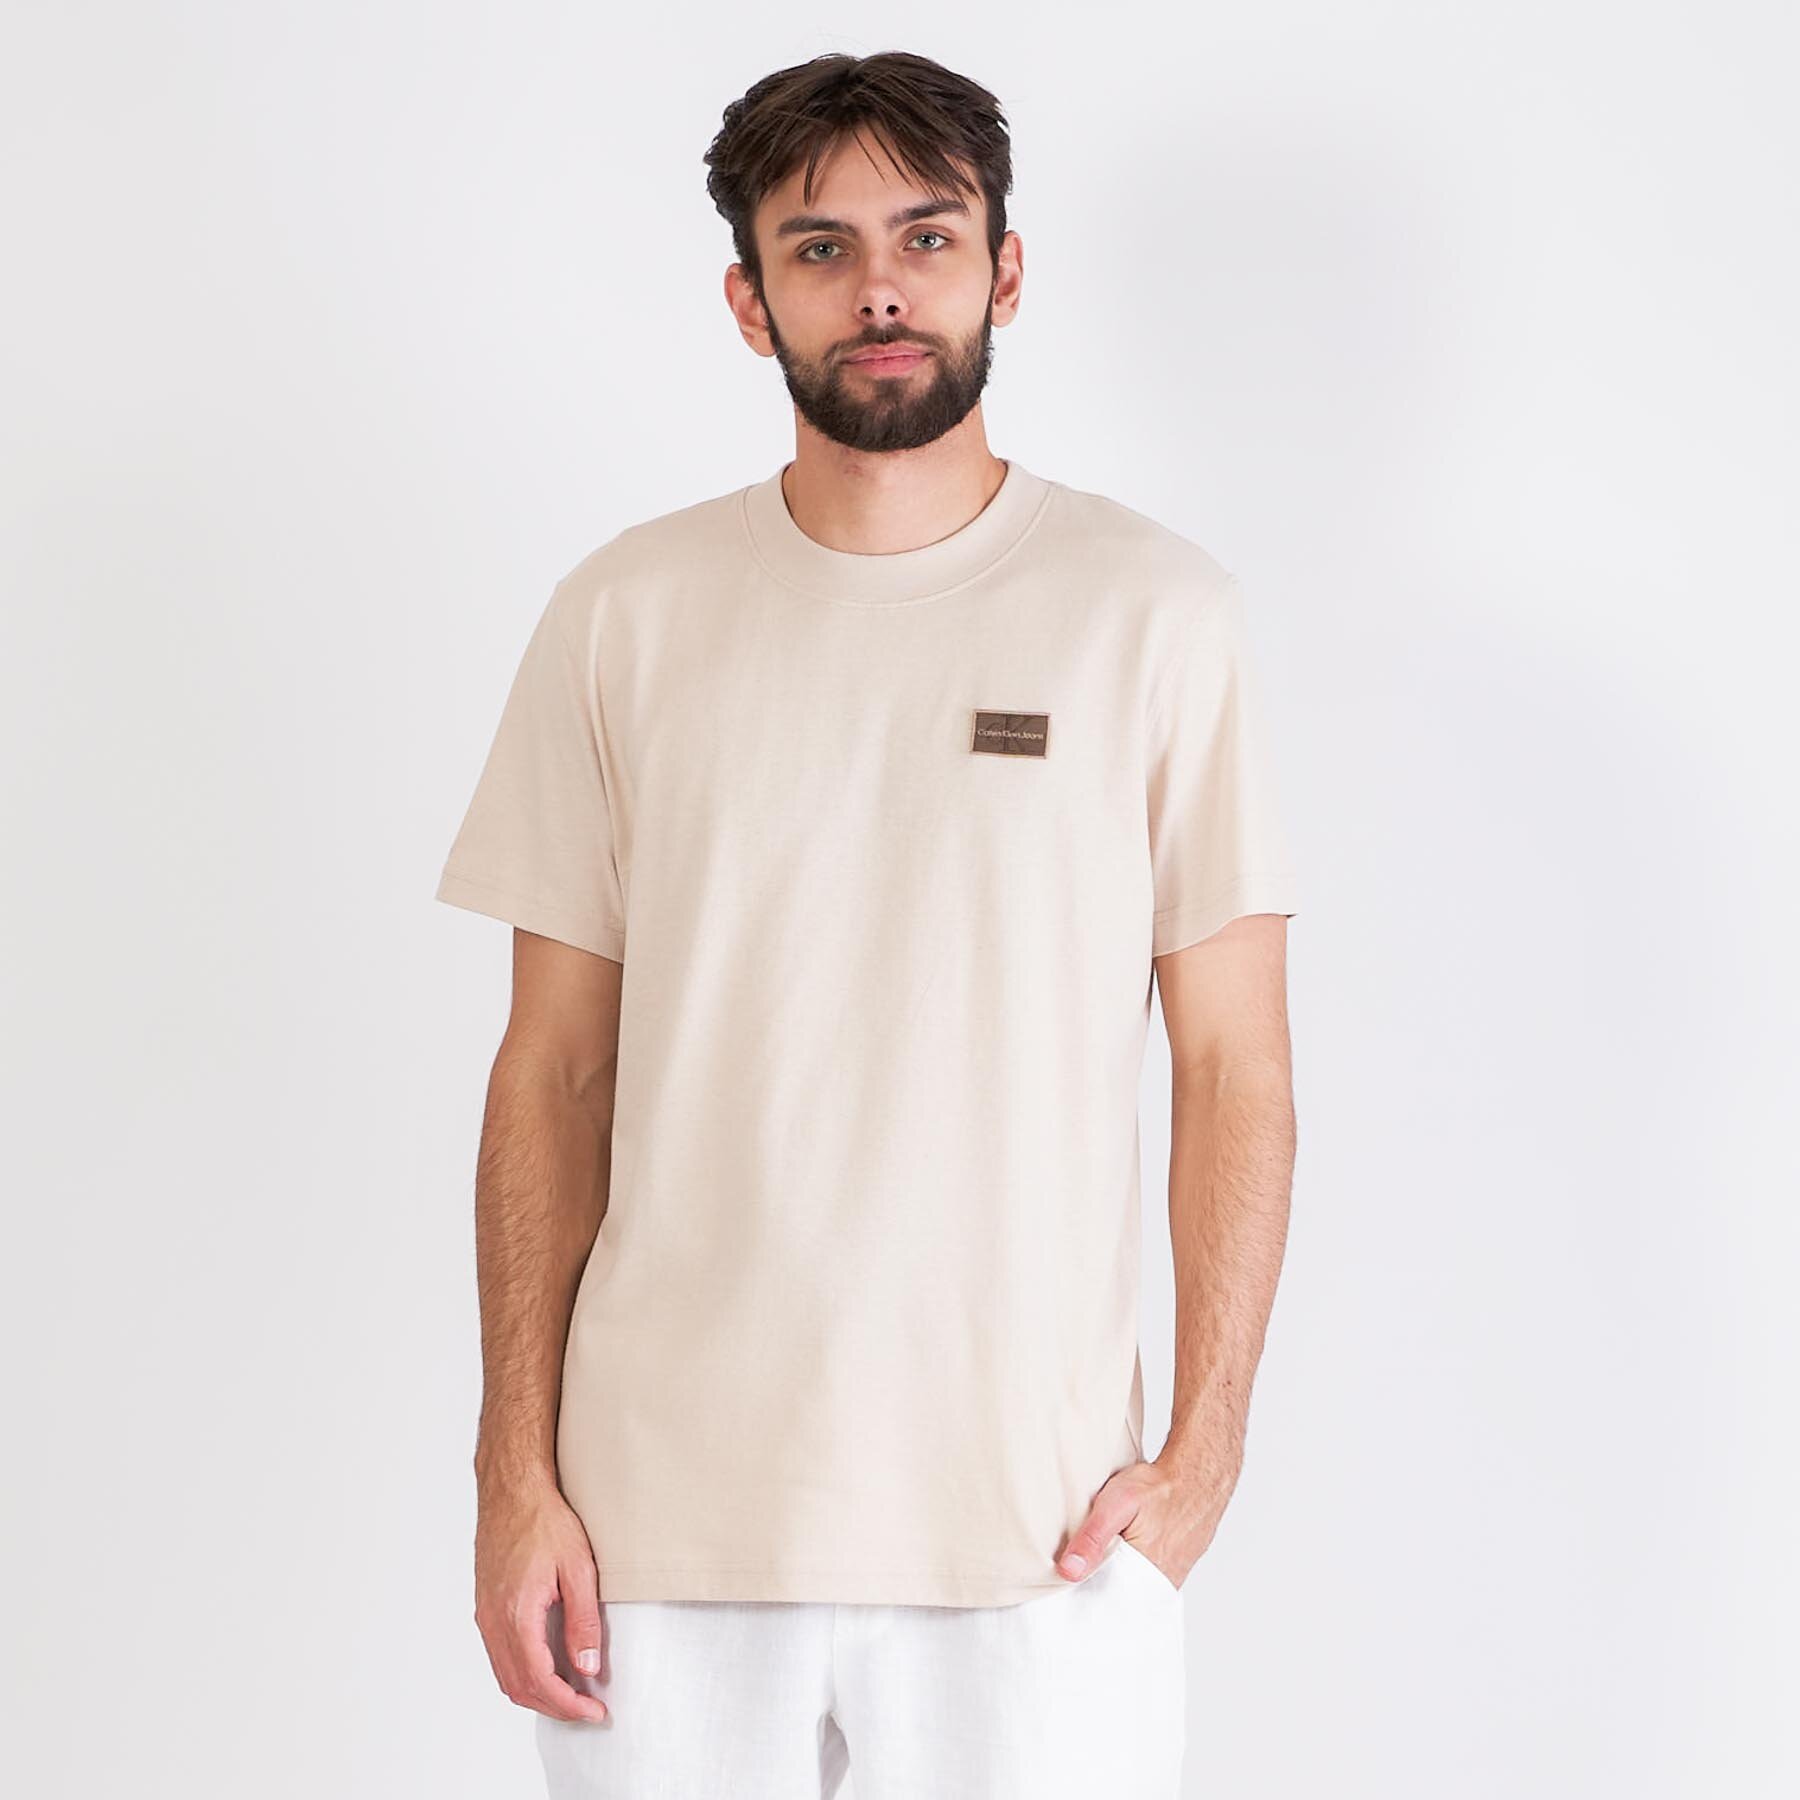 Calvin Klein - Shrunken badge tee - T-shirts til mænd - Beige - XL